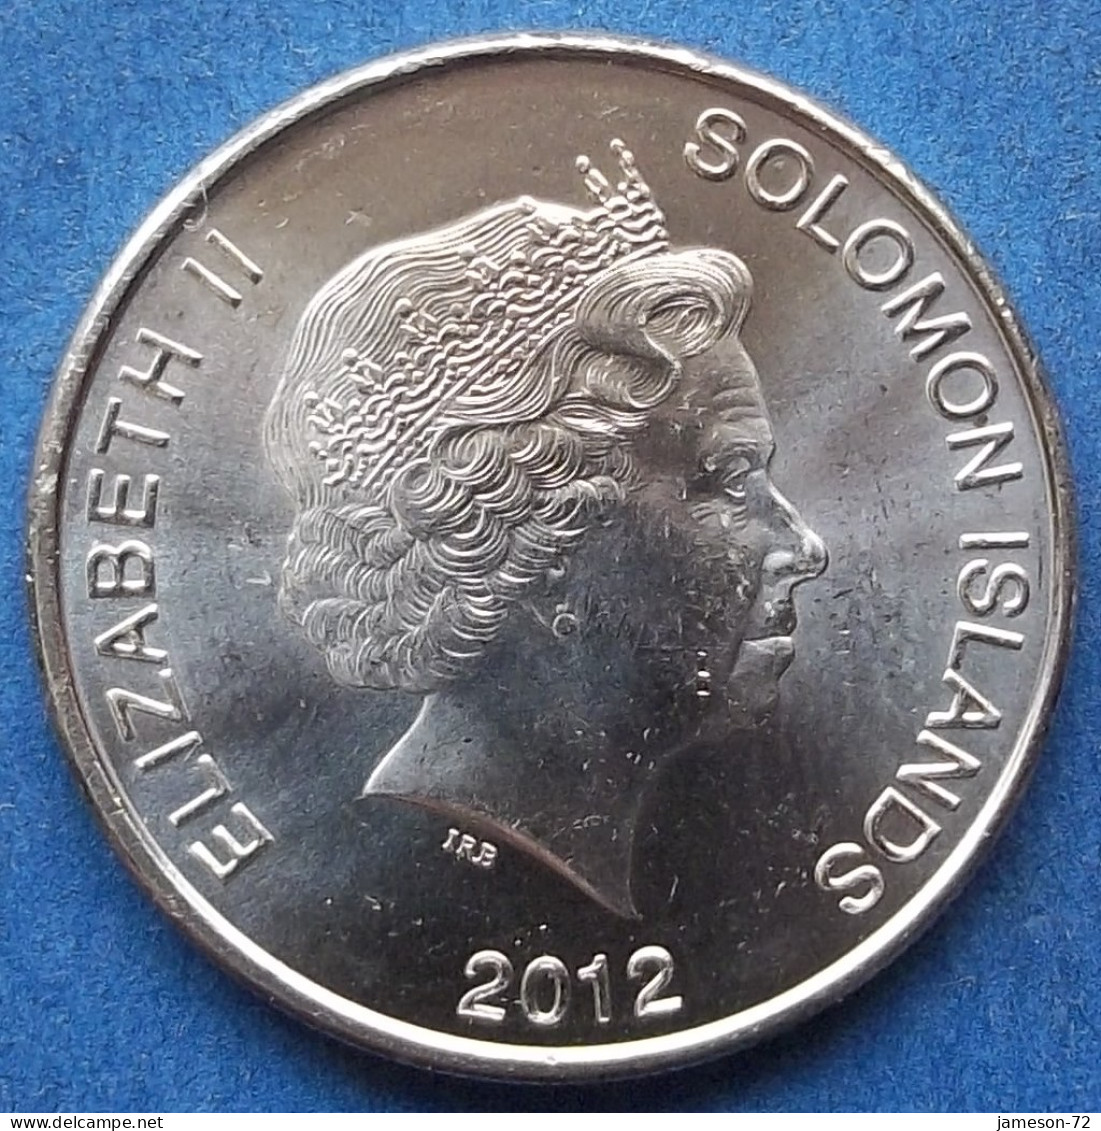 SOLOMON ISLANDS - 50 Censt 2012 "Eagle Spirit" KM# 237 Commonwealth Nation, Elizabeth II - Edelweiss Coins - Salomonen